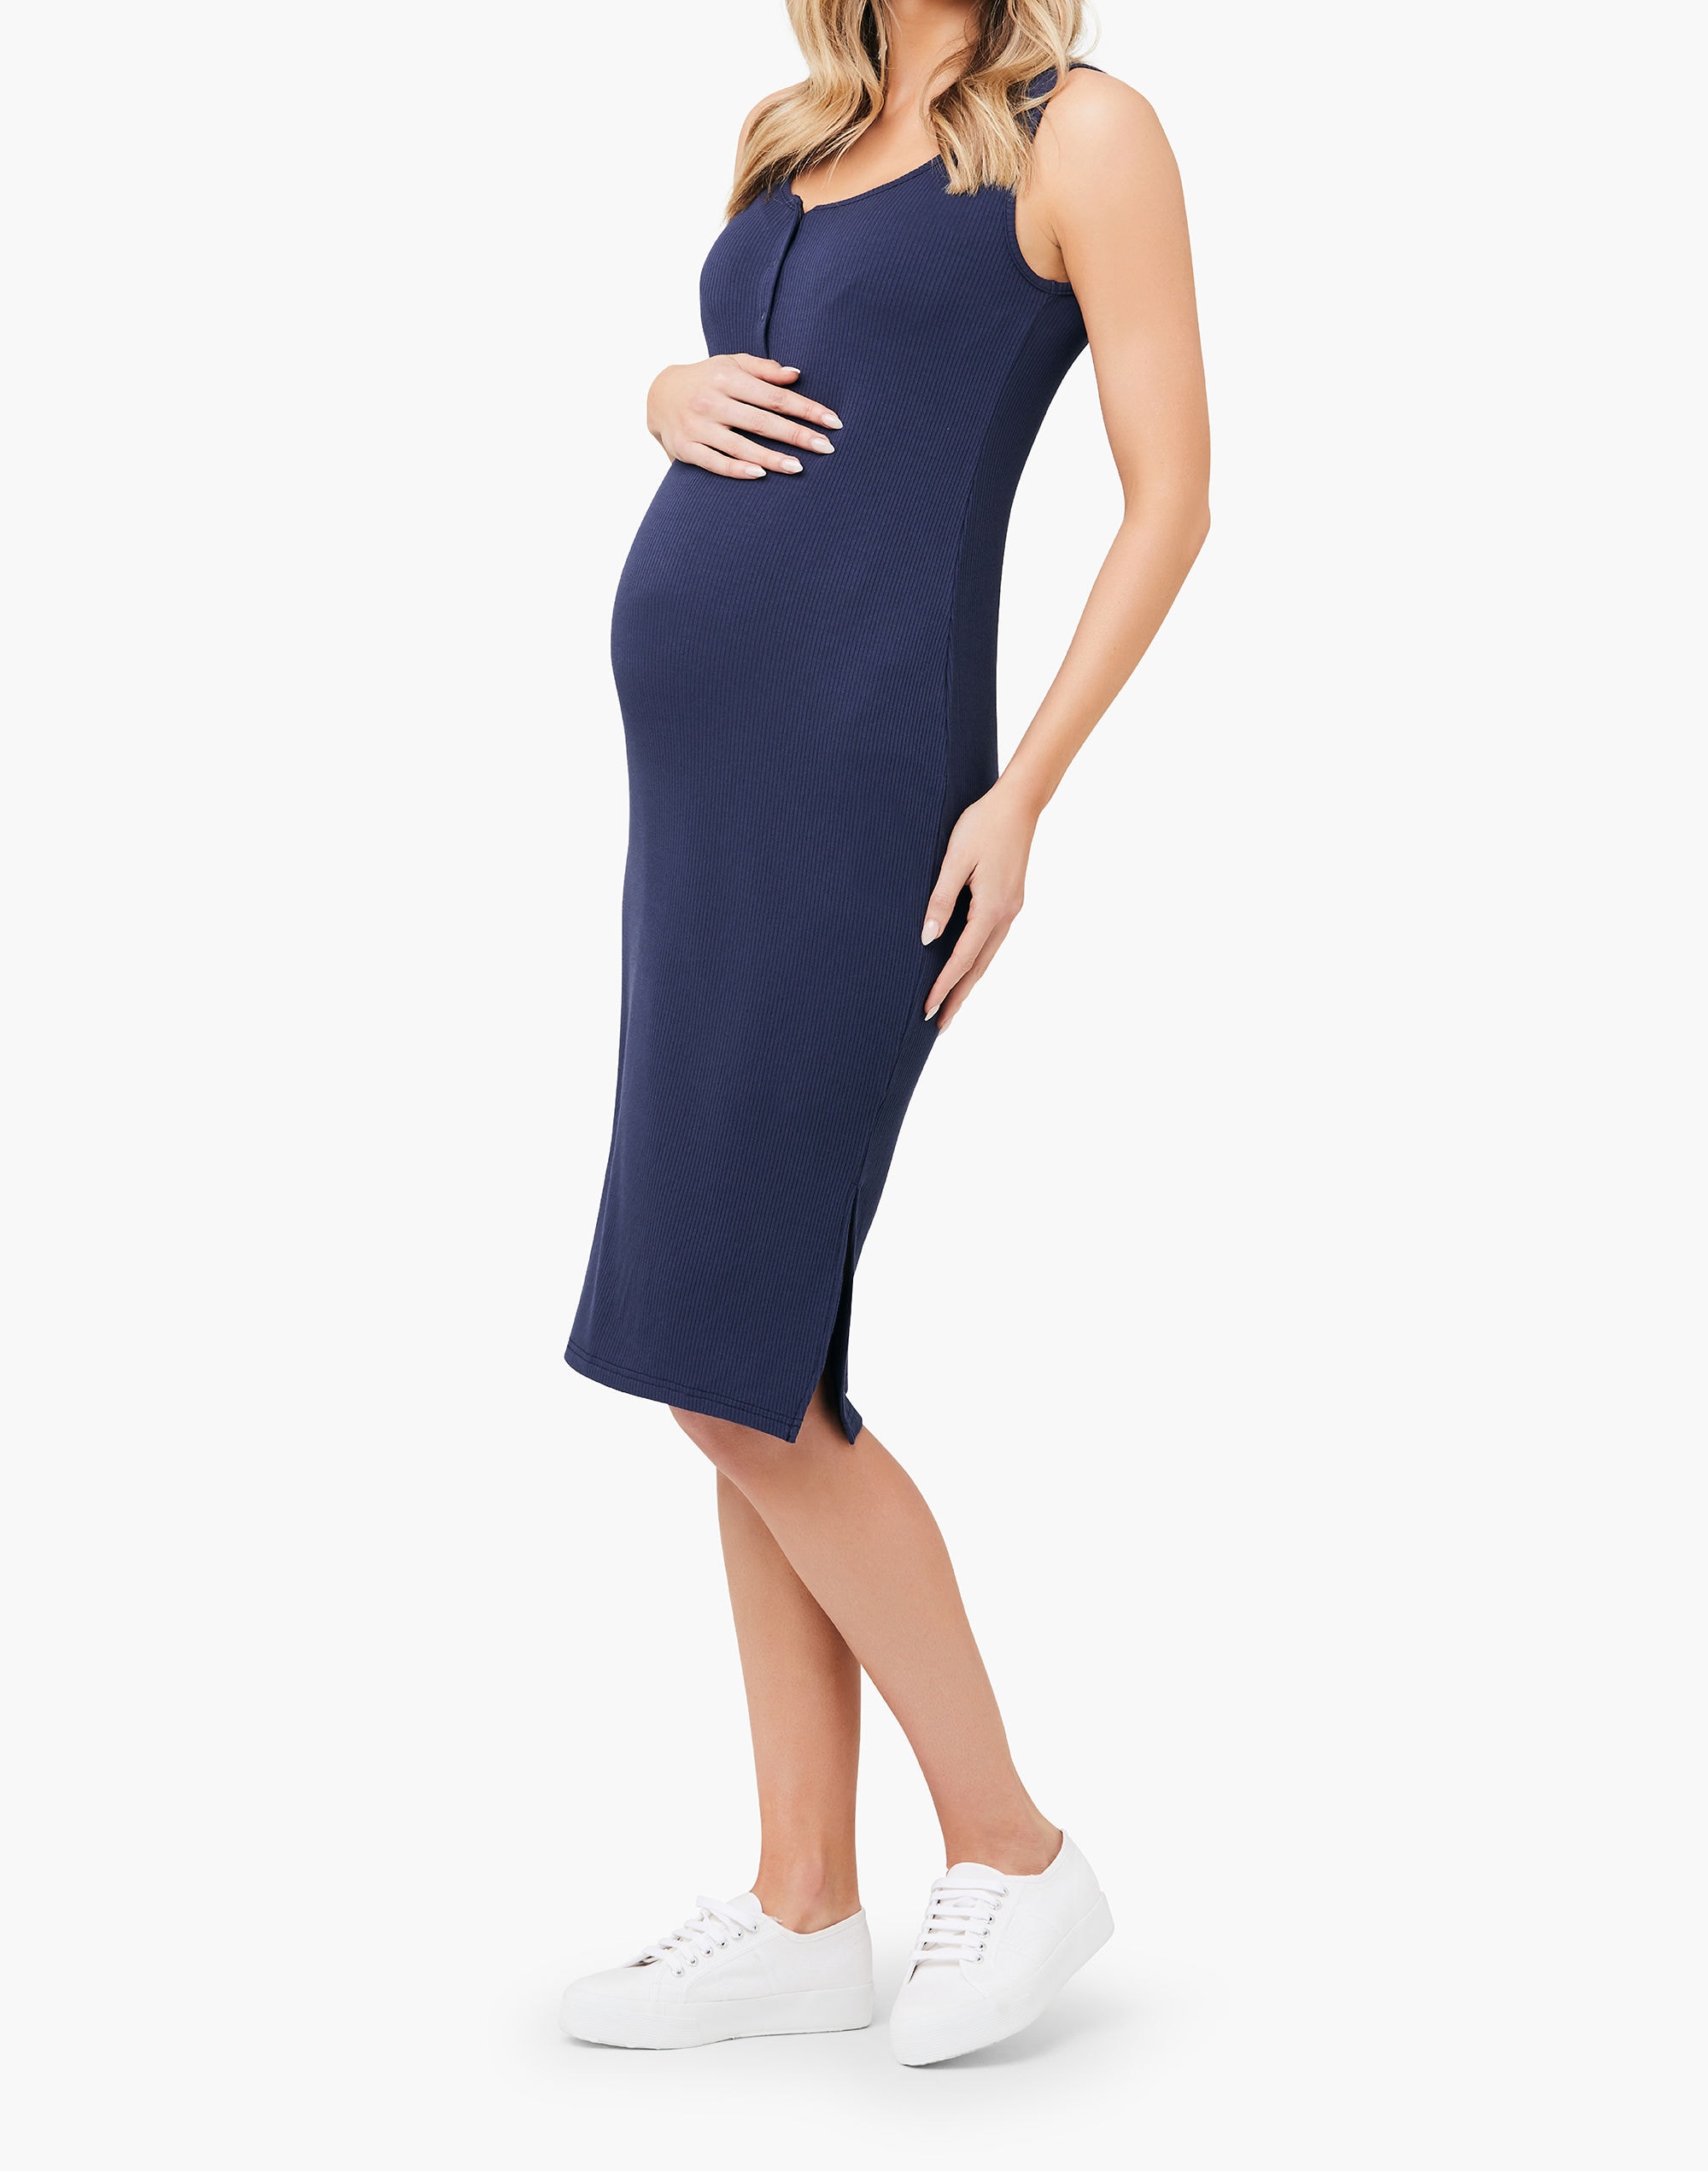 Ripe Maternity Adel Button Through Dress